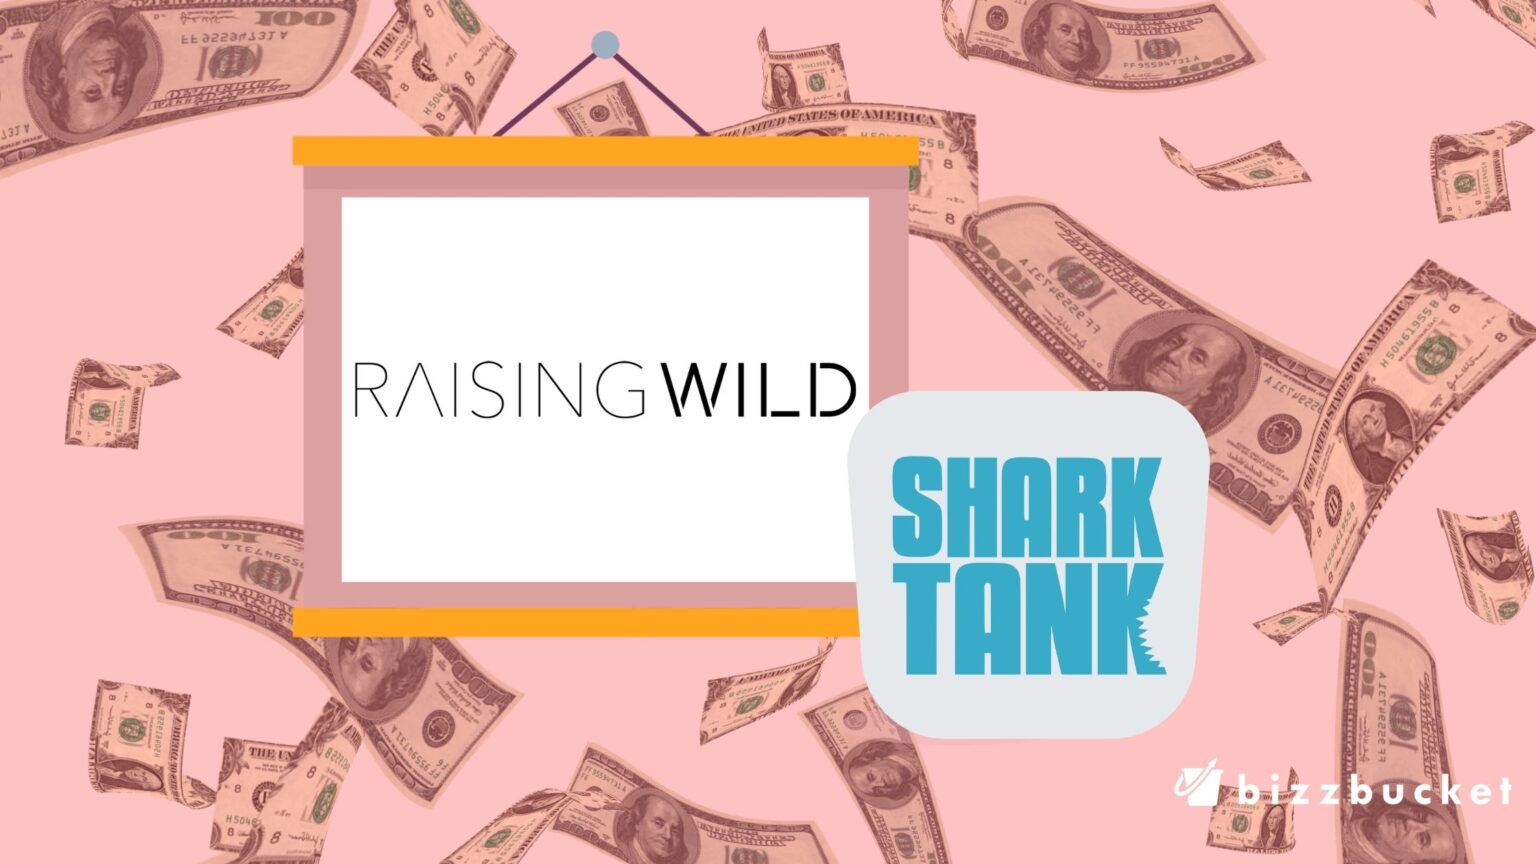 What Happened to Raising Wild After Shark Tank? BizzBucket